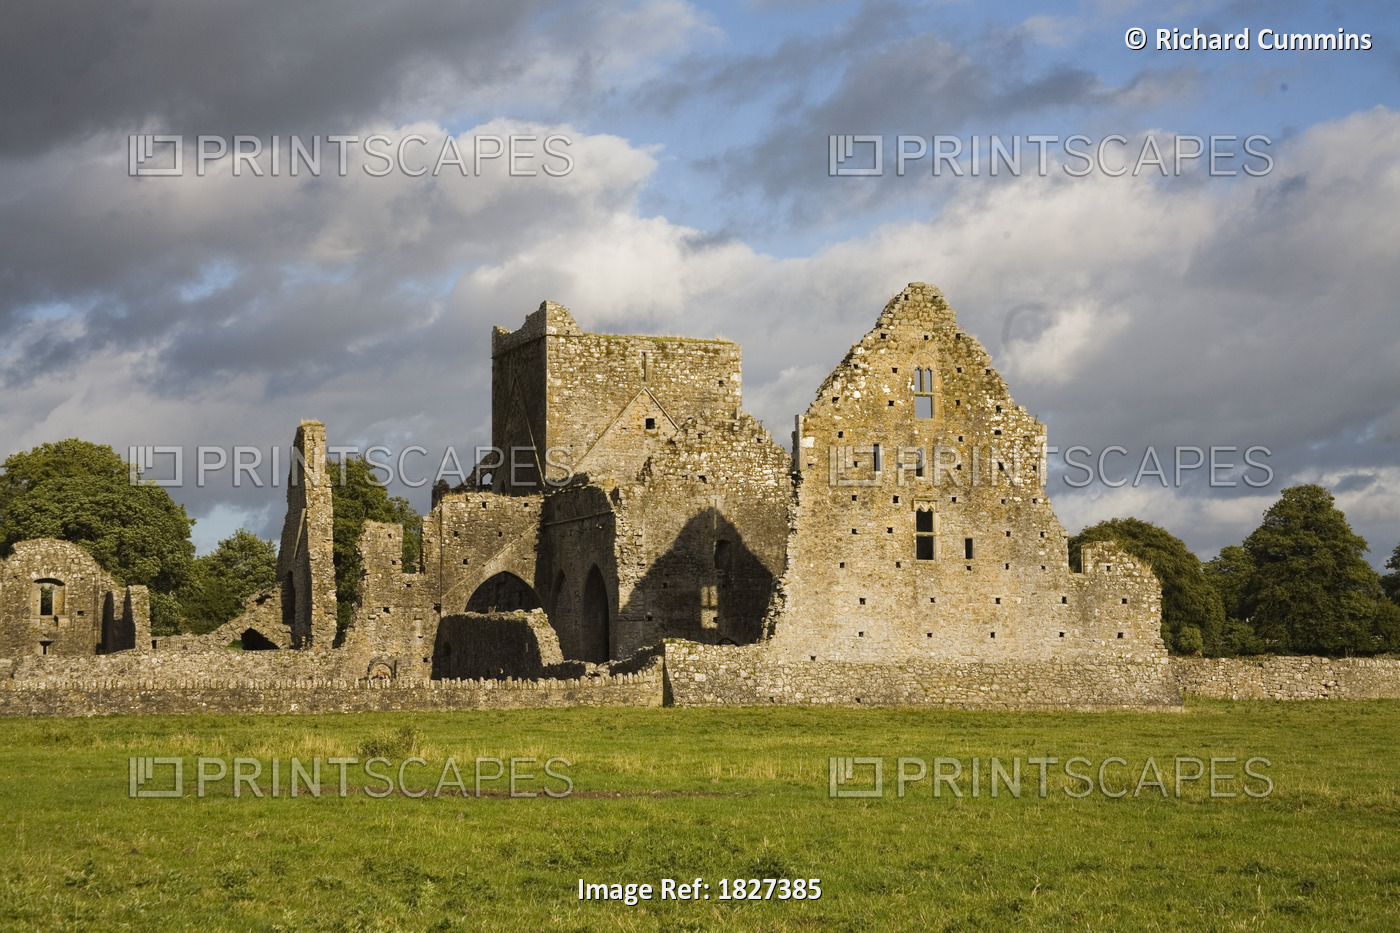 Hore Abbey, Cashel, County Tipperary, Ireland; Abbey Ruins In Field